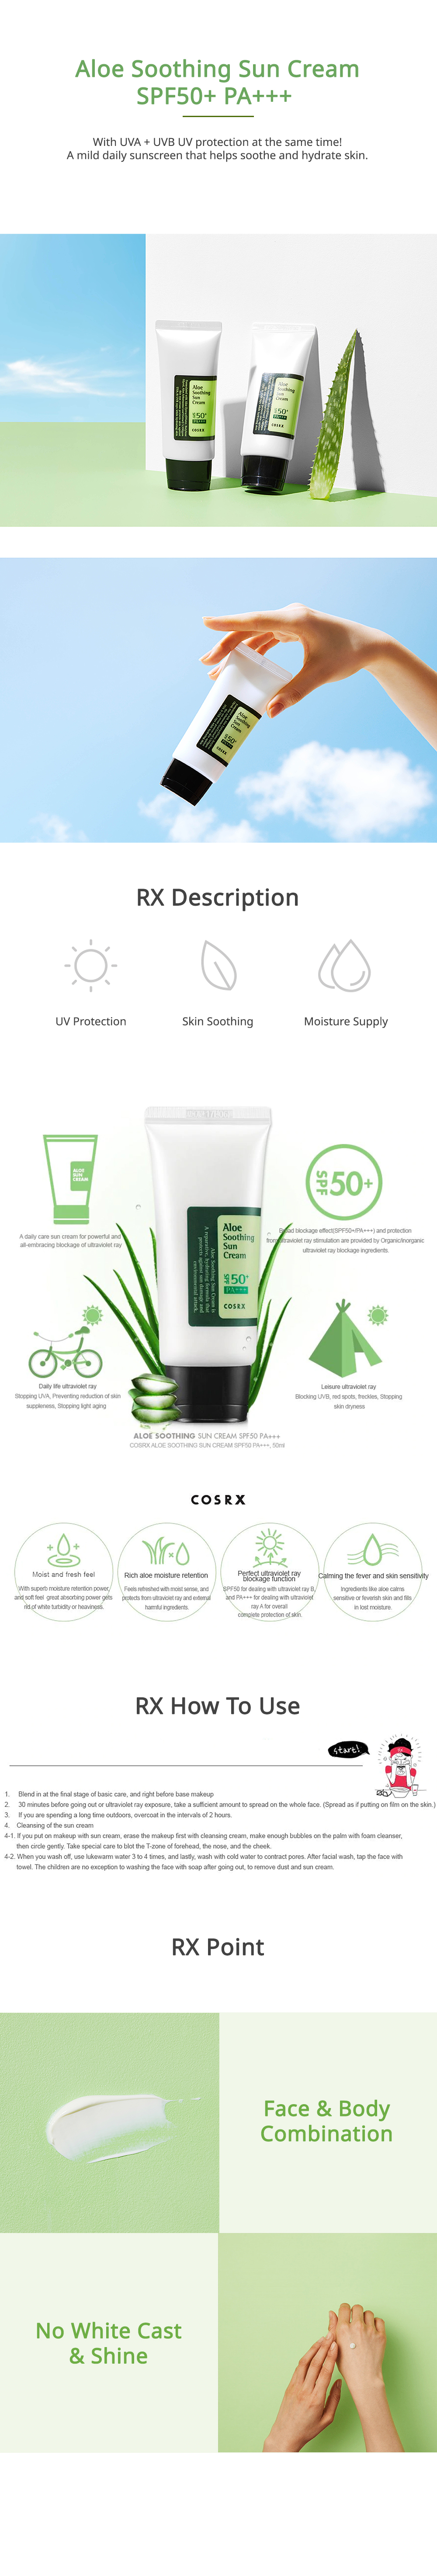 COSRX Aloe Soothing Sun Cream SPF50+, PA+++ 50ml korean skincare